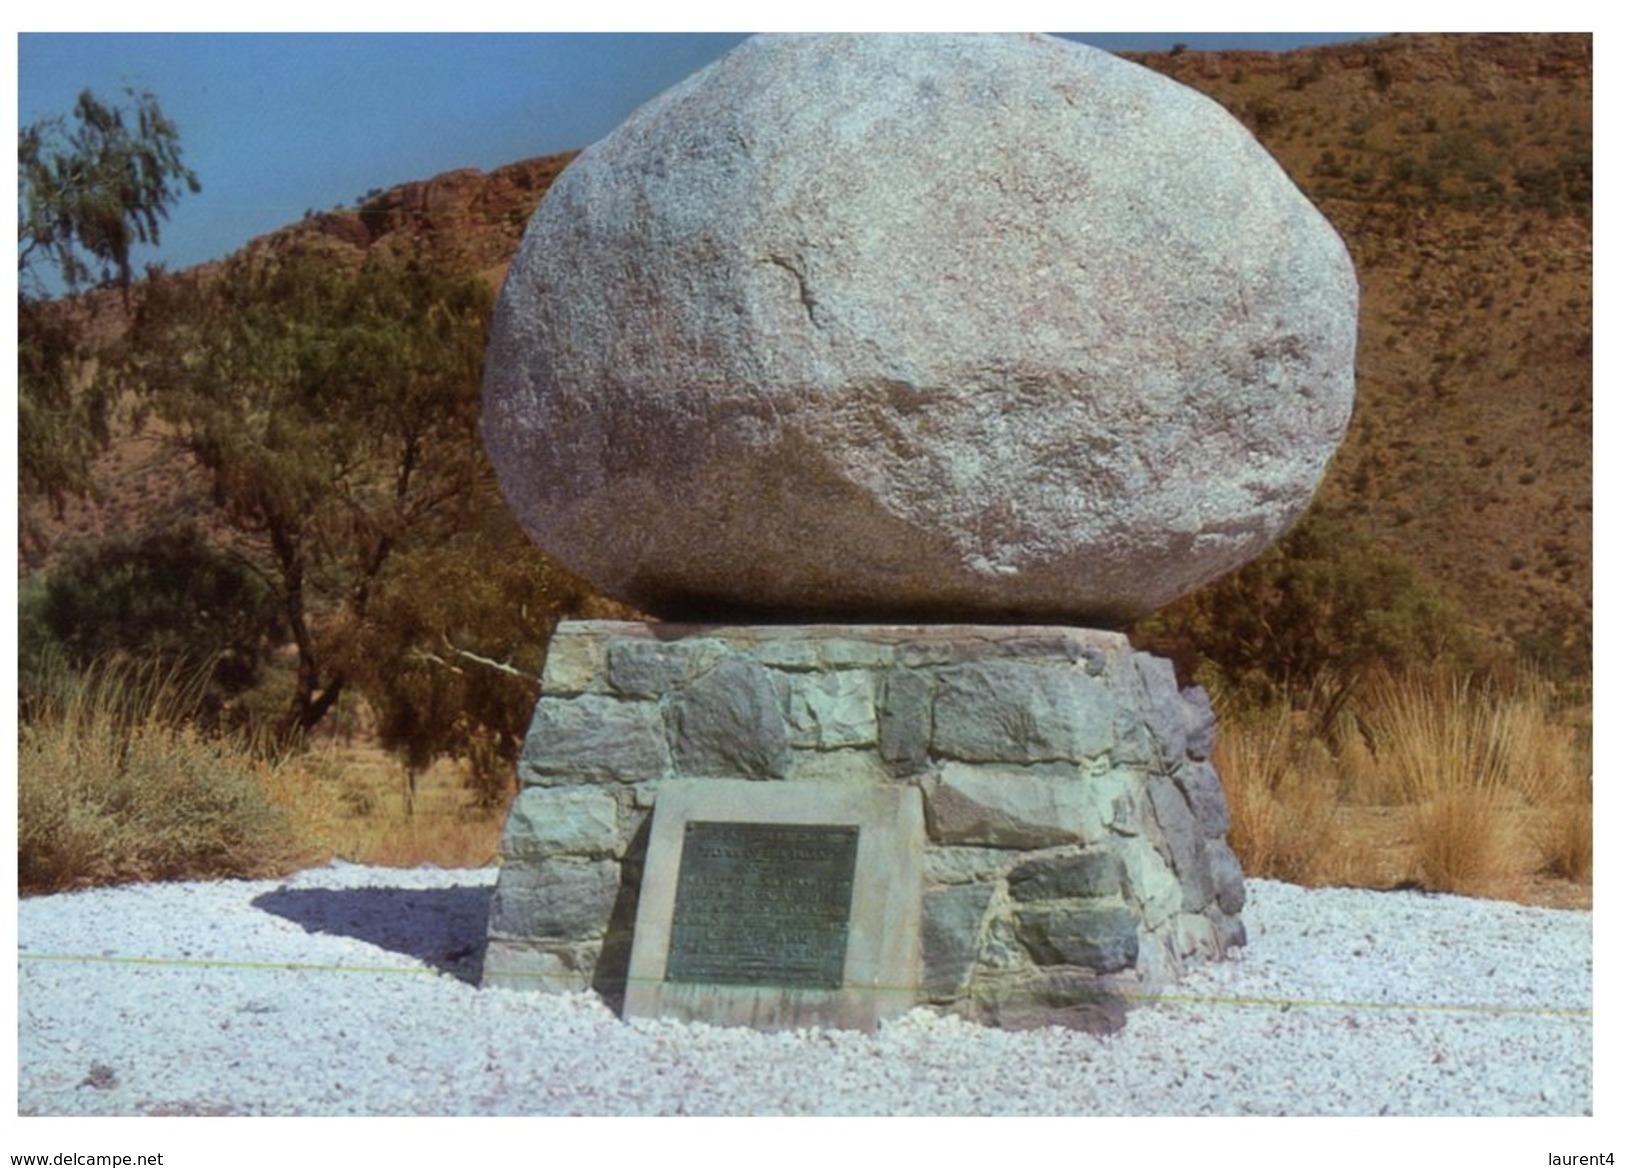 (719) Australia - NT - Flynn Grave (near Alice Springs) - Alice Springs